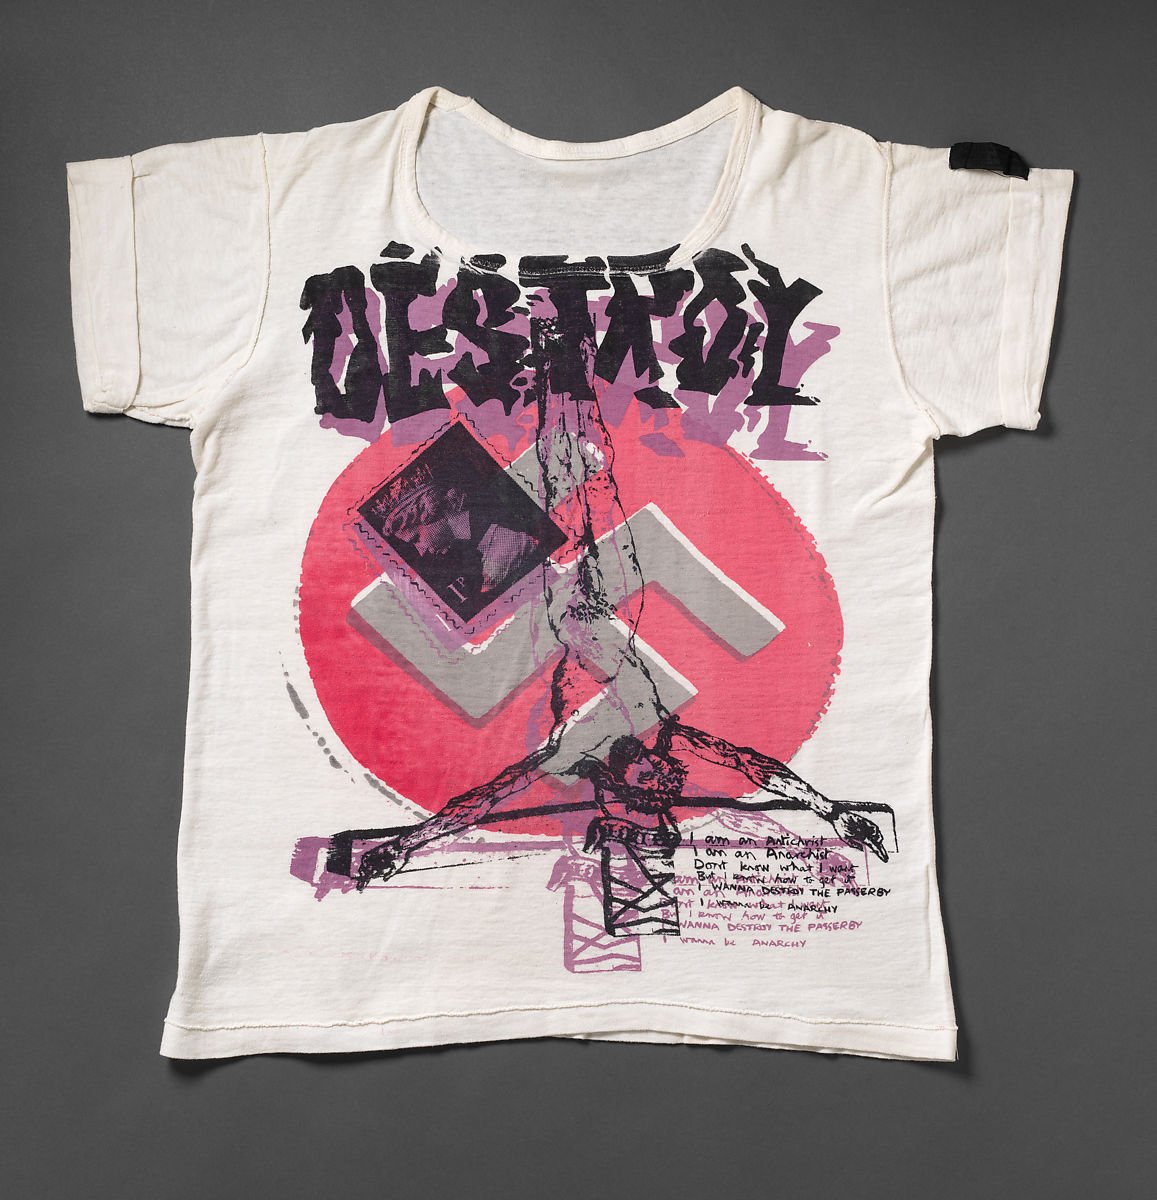 Destroy t-shirt